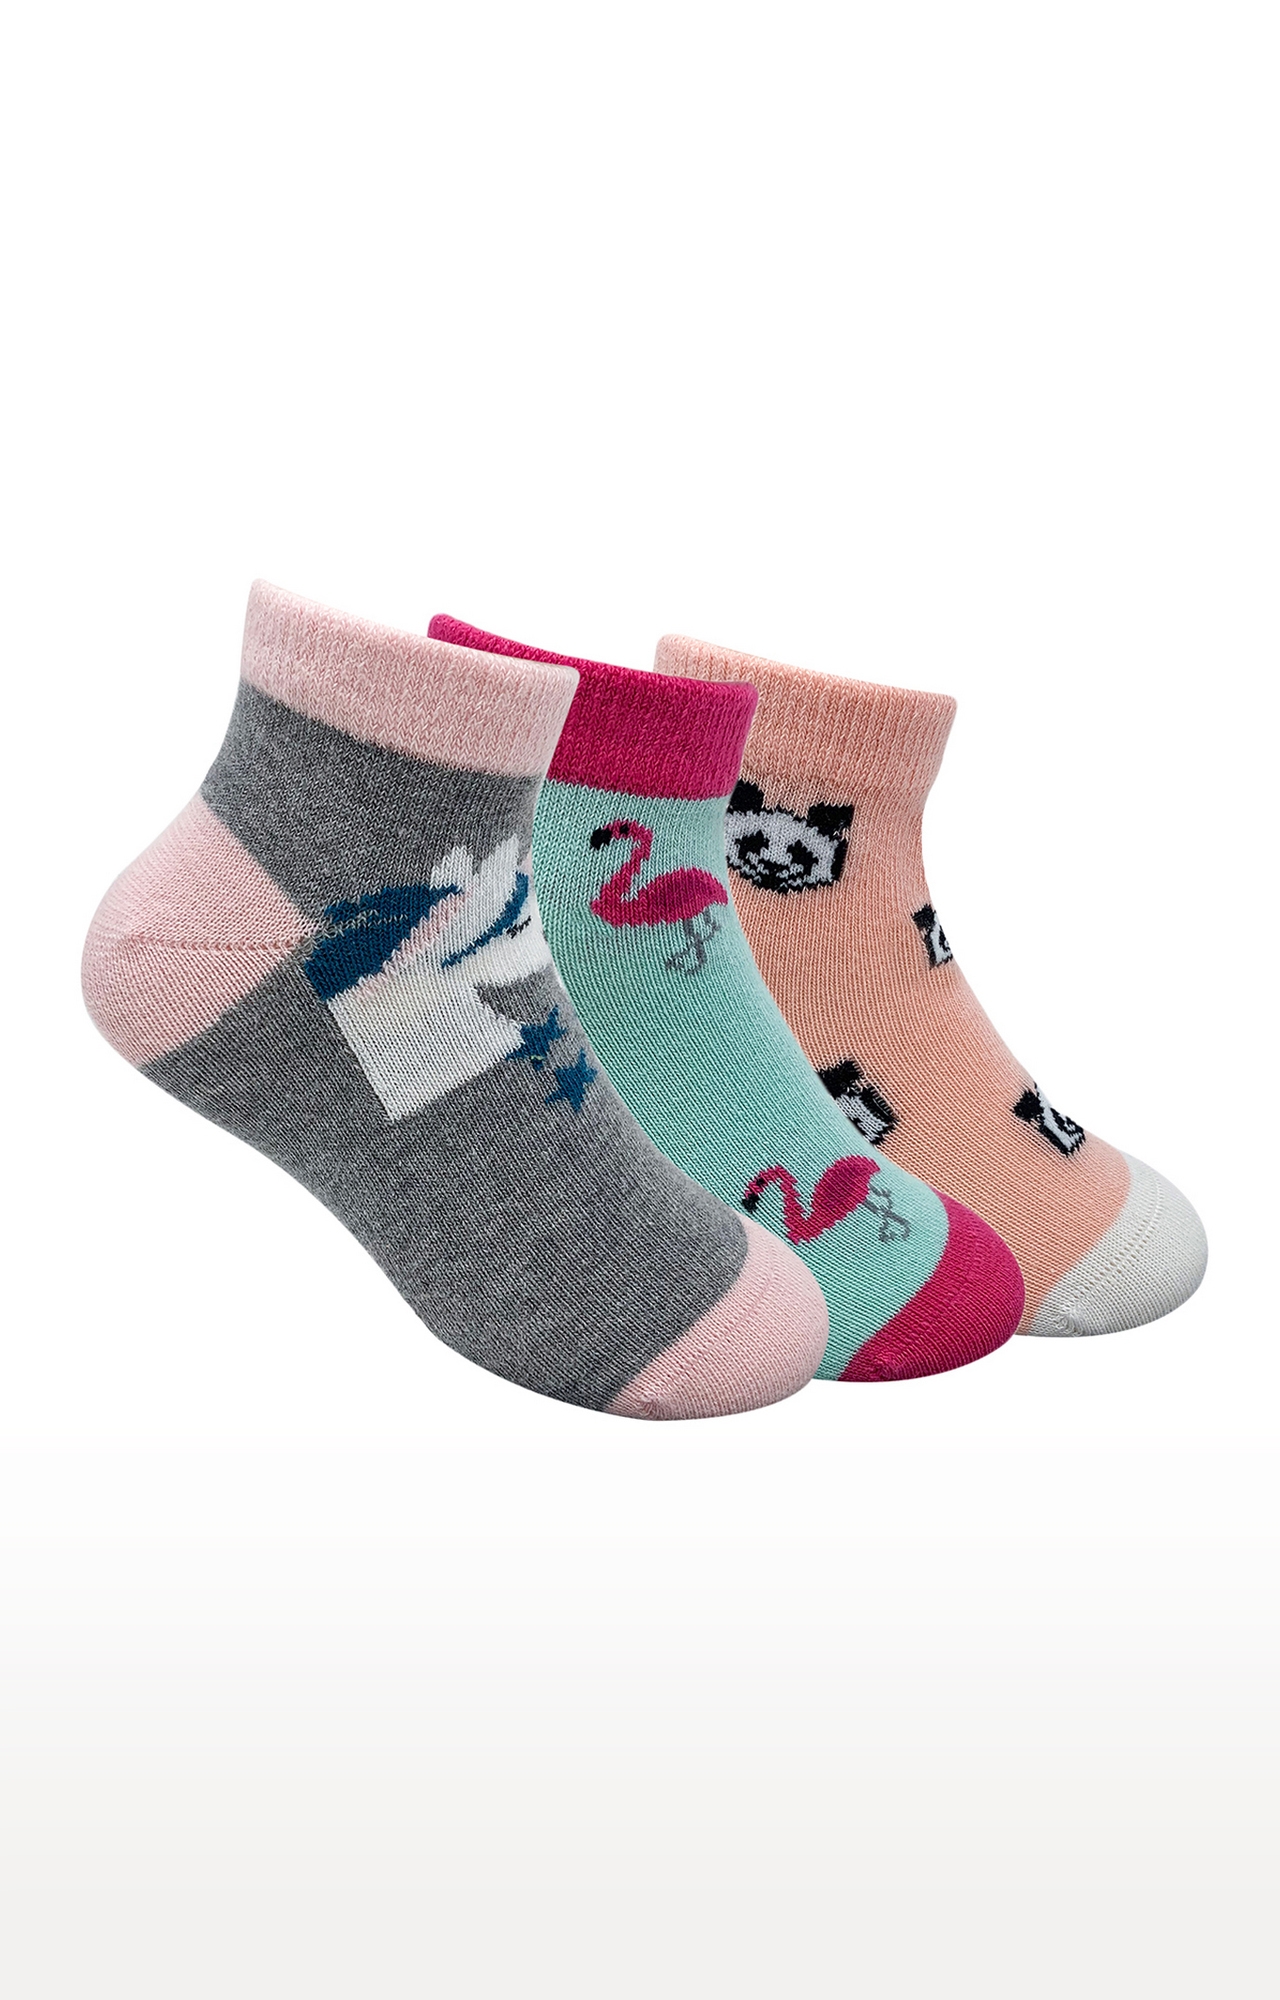 Mint & Oak | Mint & Oak Magical Feeling Cotton Multi Ankle Length Socks for Kids - Pack of 3 0